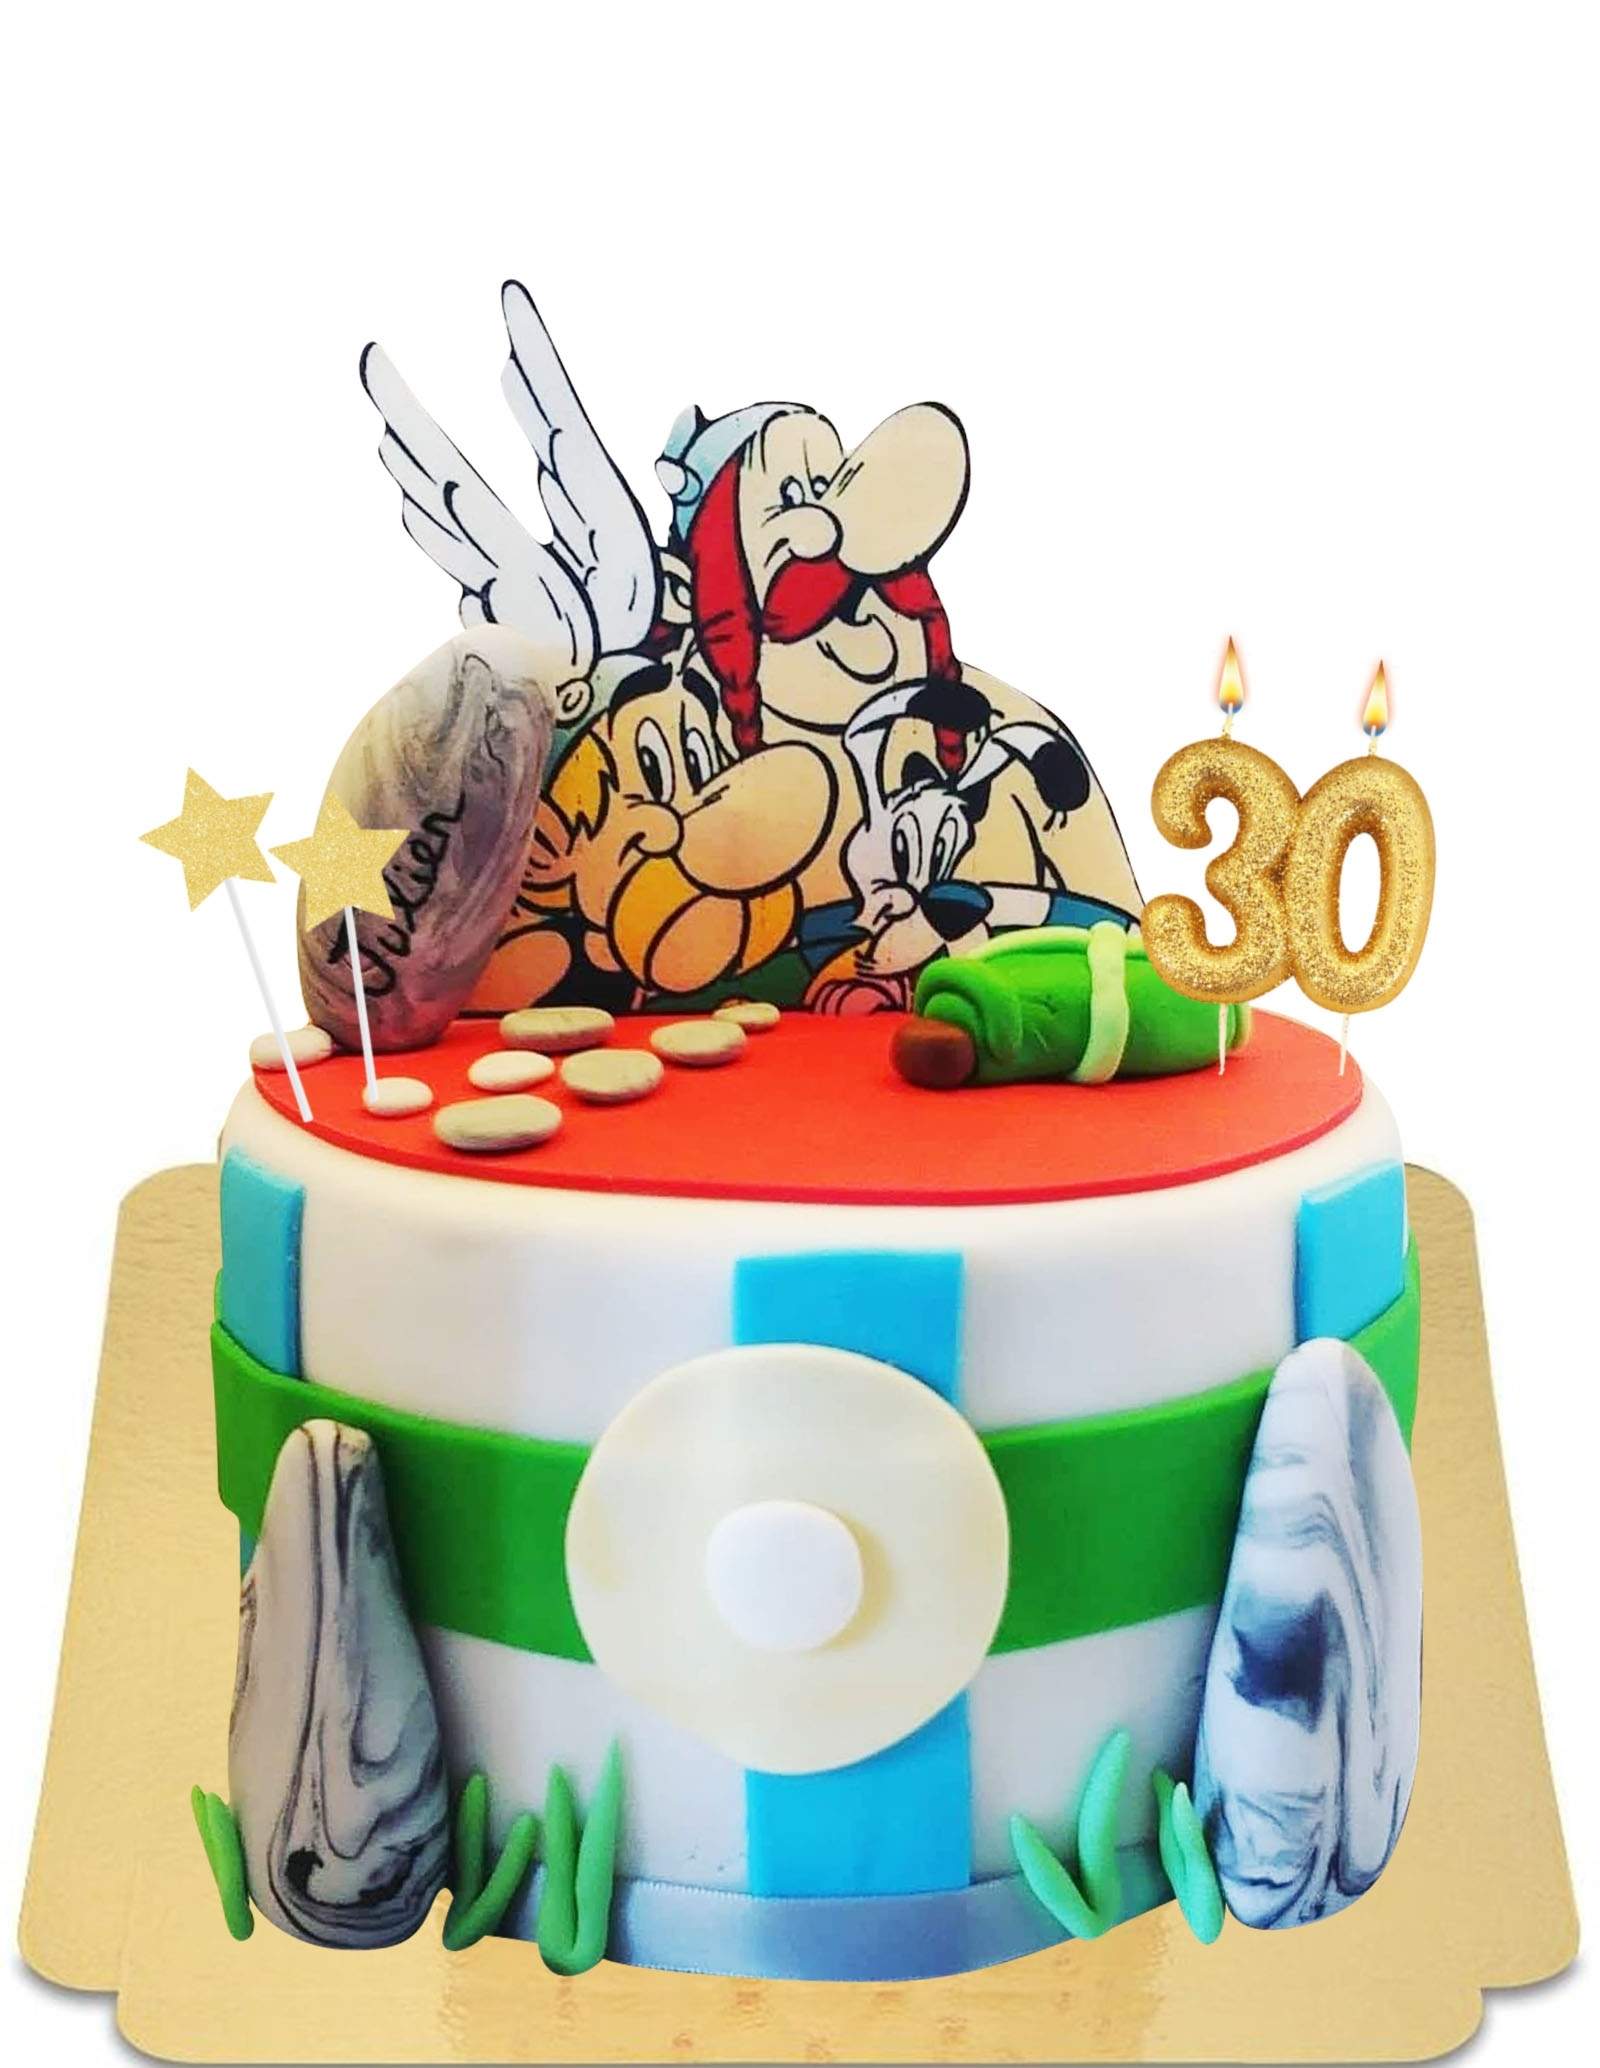 Asterix and Obelix mini vegan menhirs cake, gluten-free